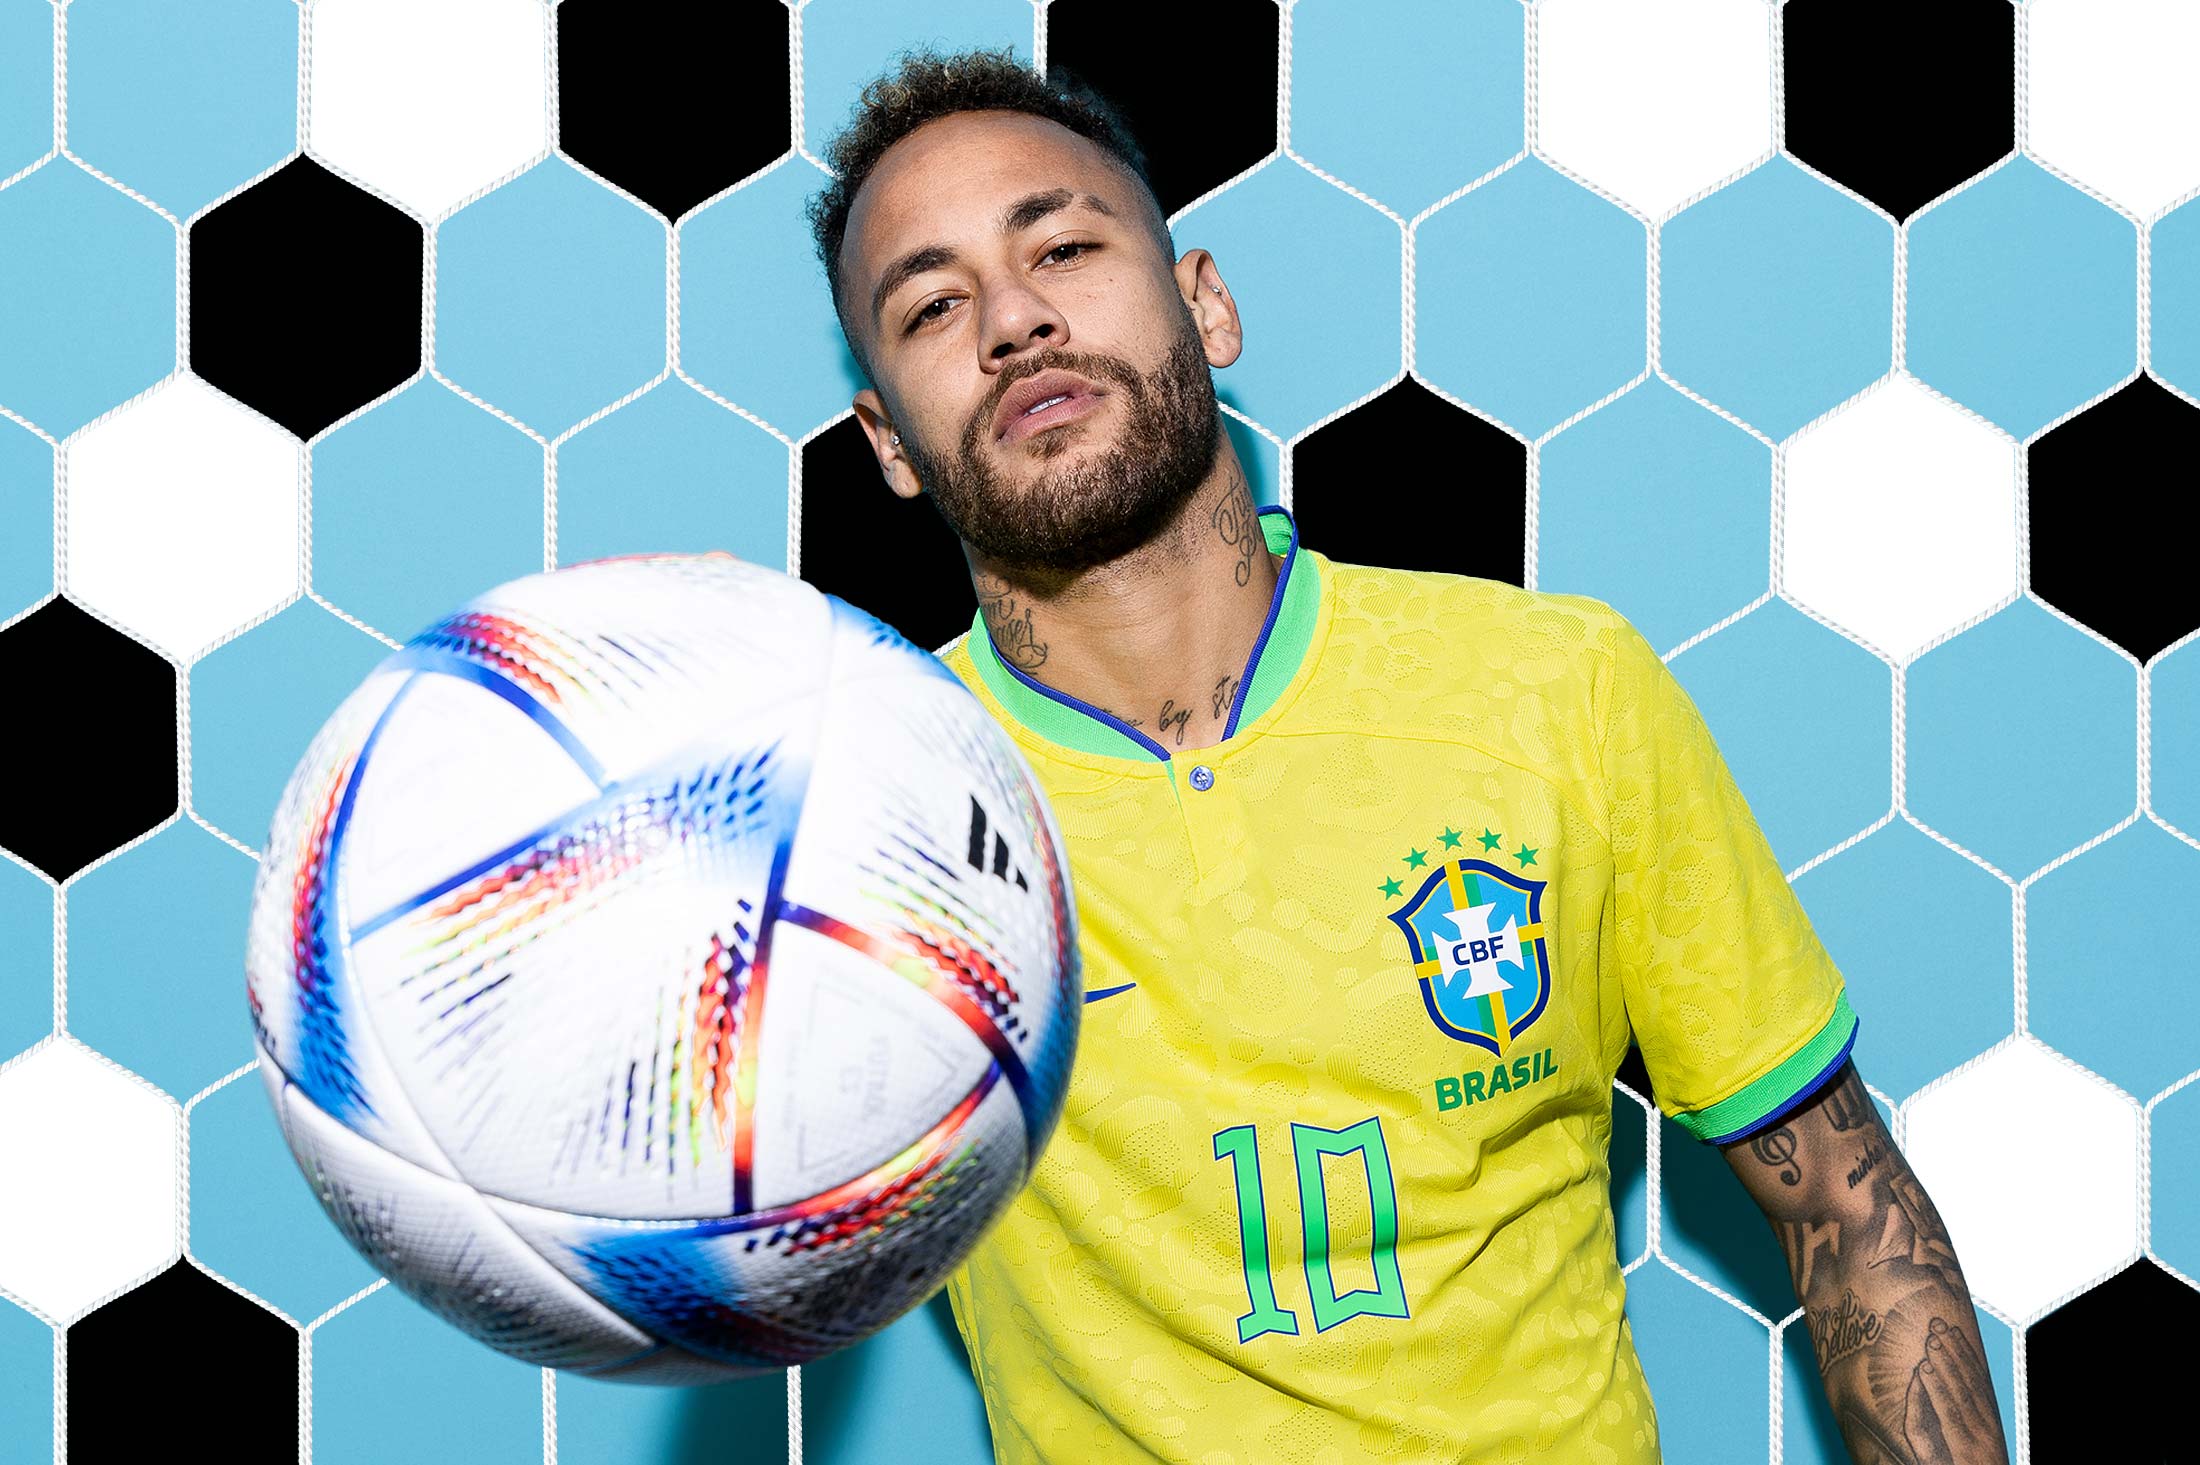 Neymar If Brazil wins the World Cup, itll define his legacy.